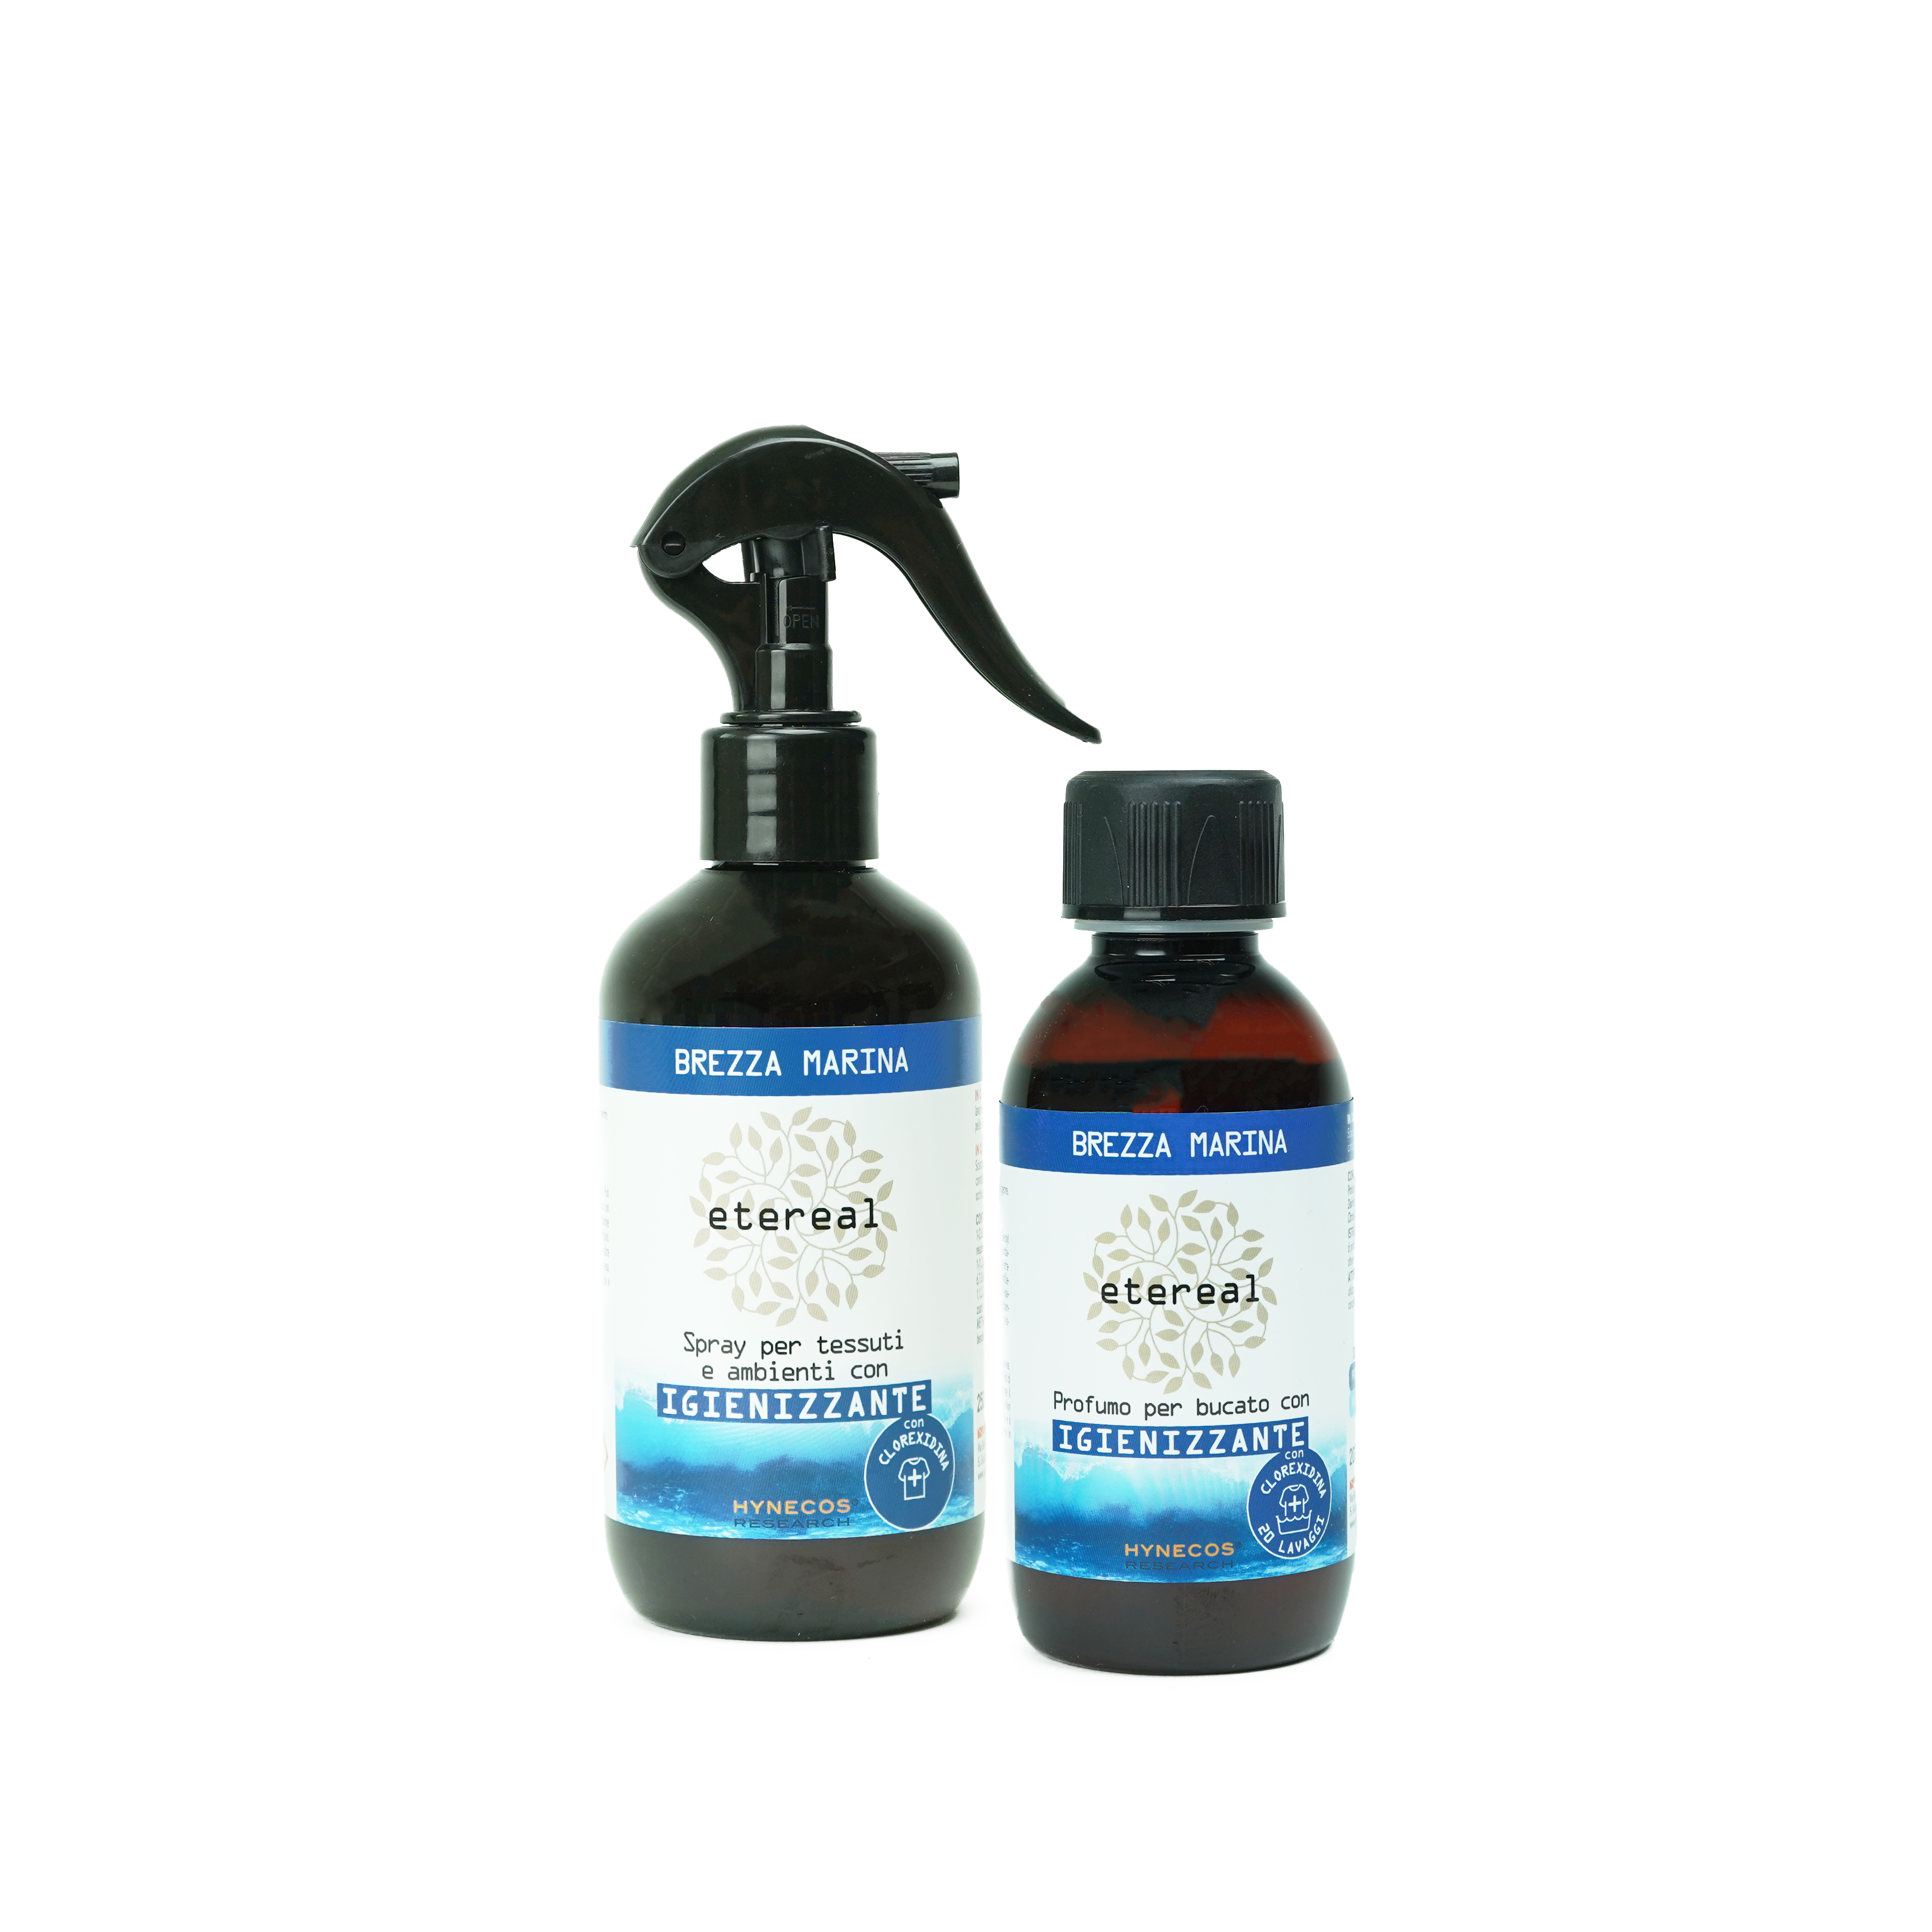 Brezza Marina - profumatore per tessuti spray 250ml